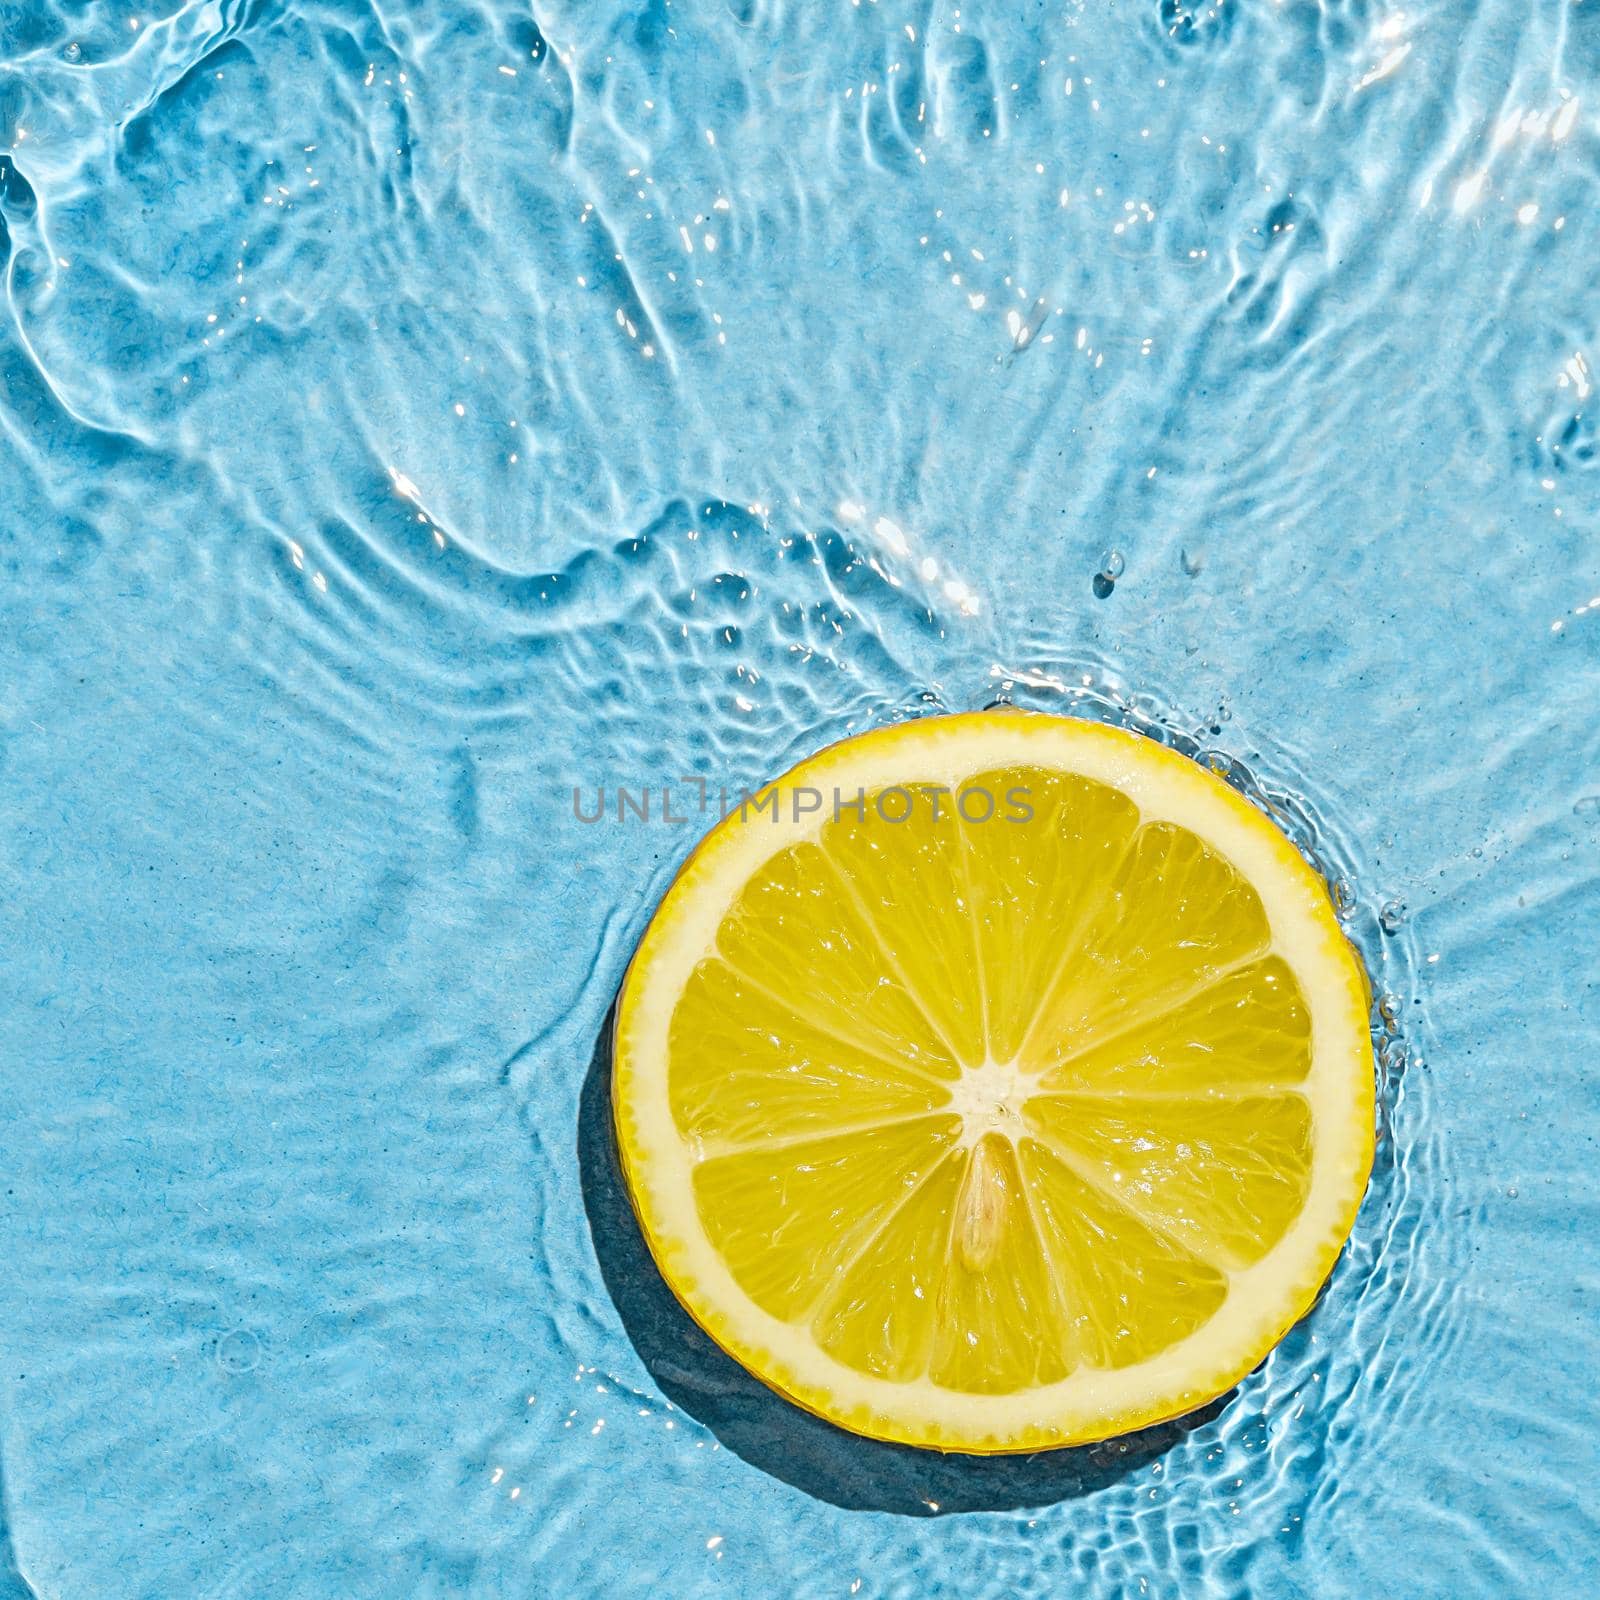 Tropics orange summer vegetarian bright juicy lemon in transparent summer blue water with wave motion. by sergii_gnatiuk